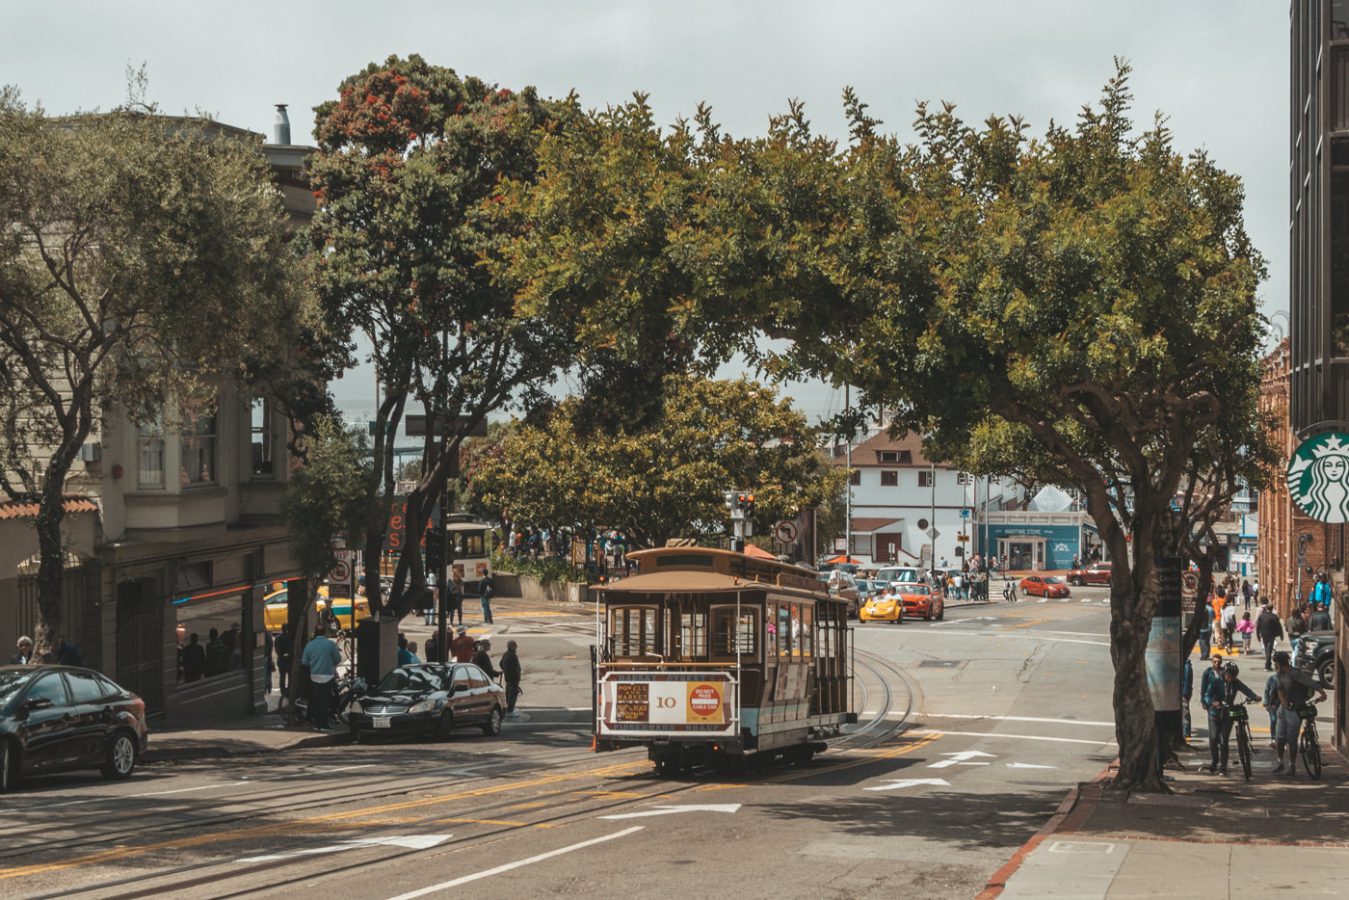 Tram in San Francisco